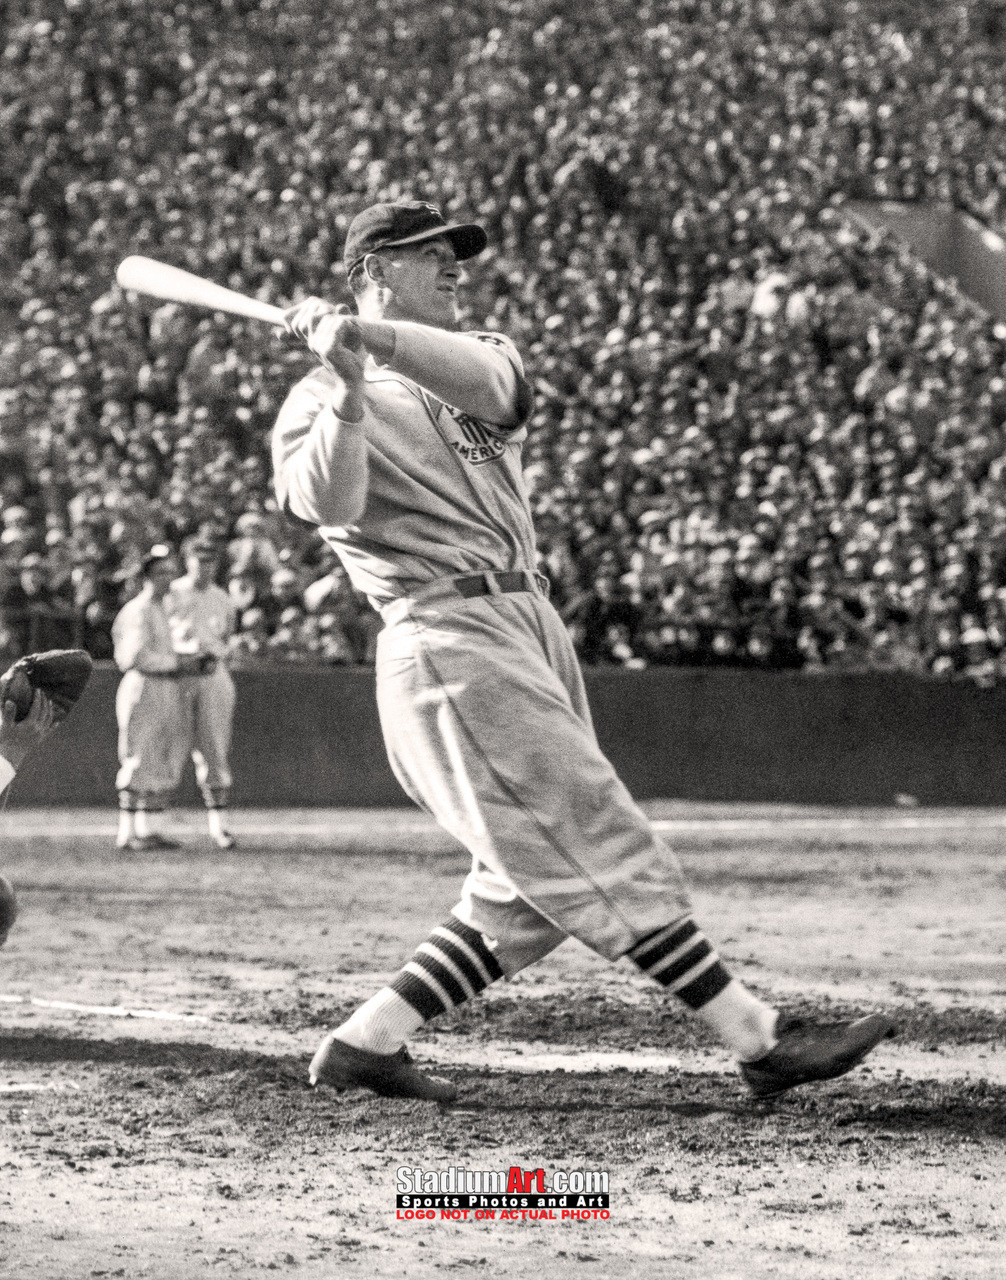 Lou Gehrig Custom Framed New York Yankees Jersey Display